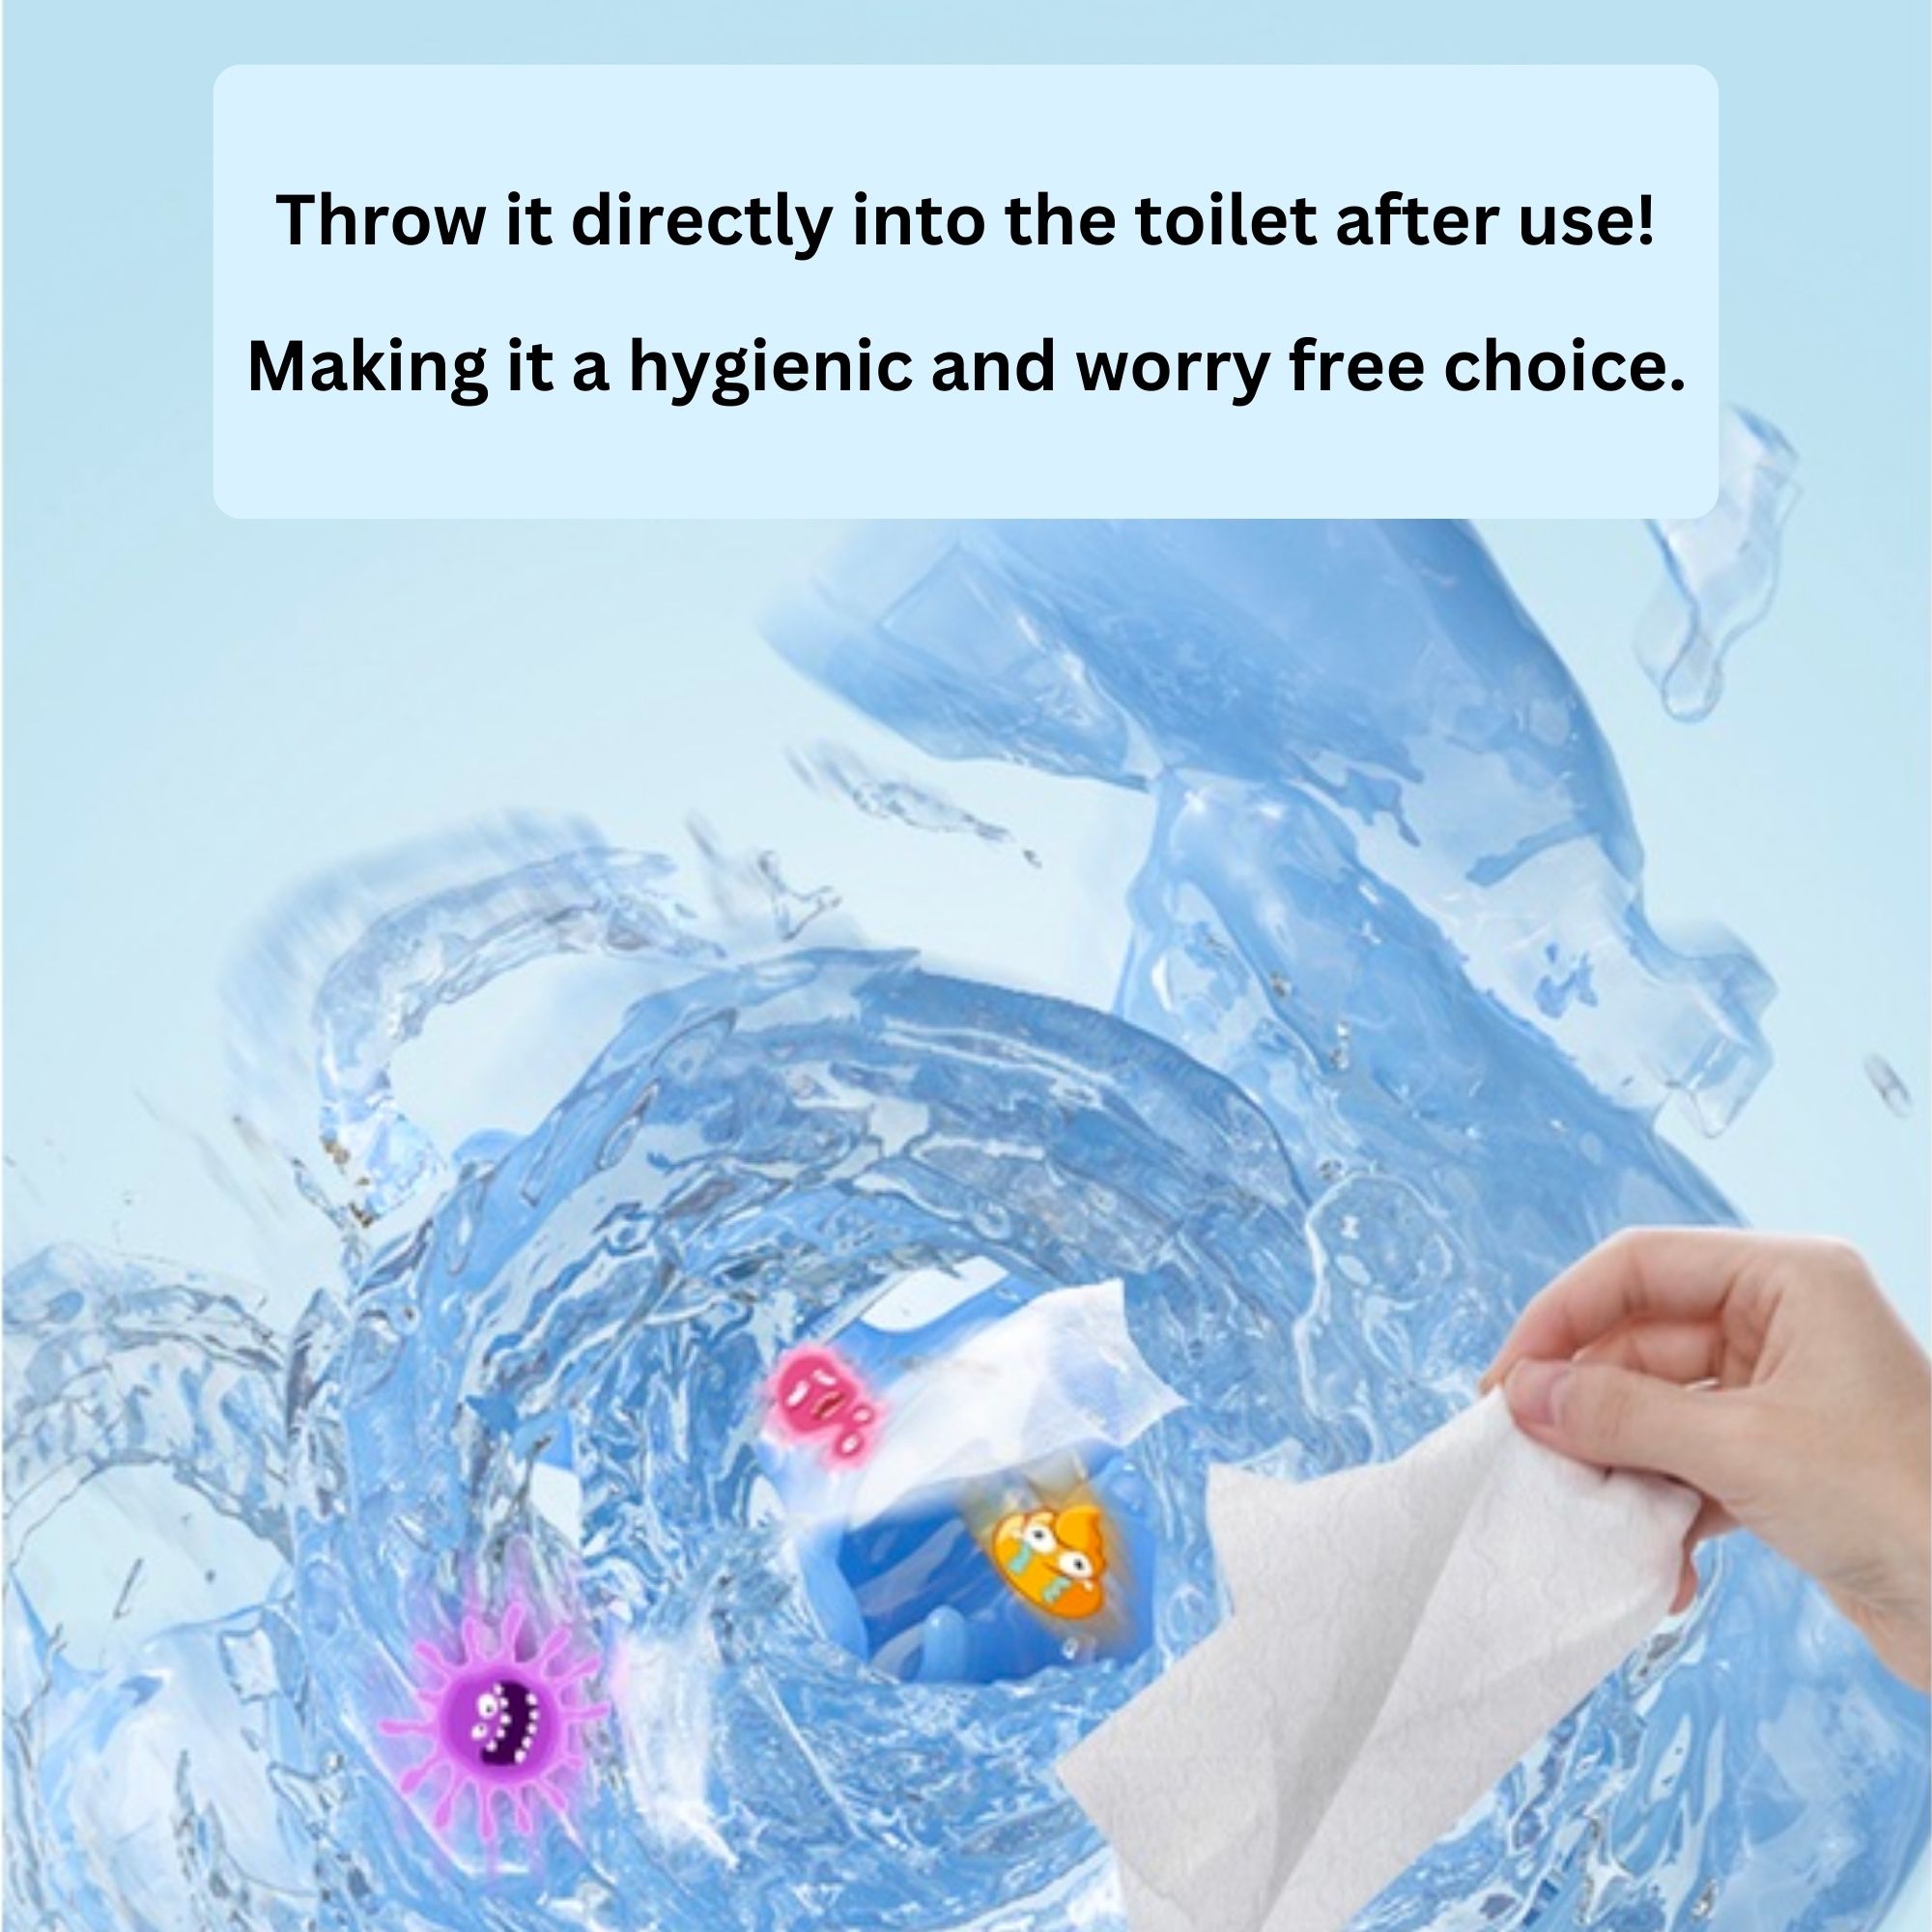 Deeyeo Flushable Wet Wipes for Toilet Use (7pcs x 8 pack) (56pcs)